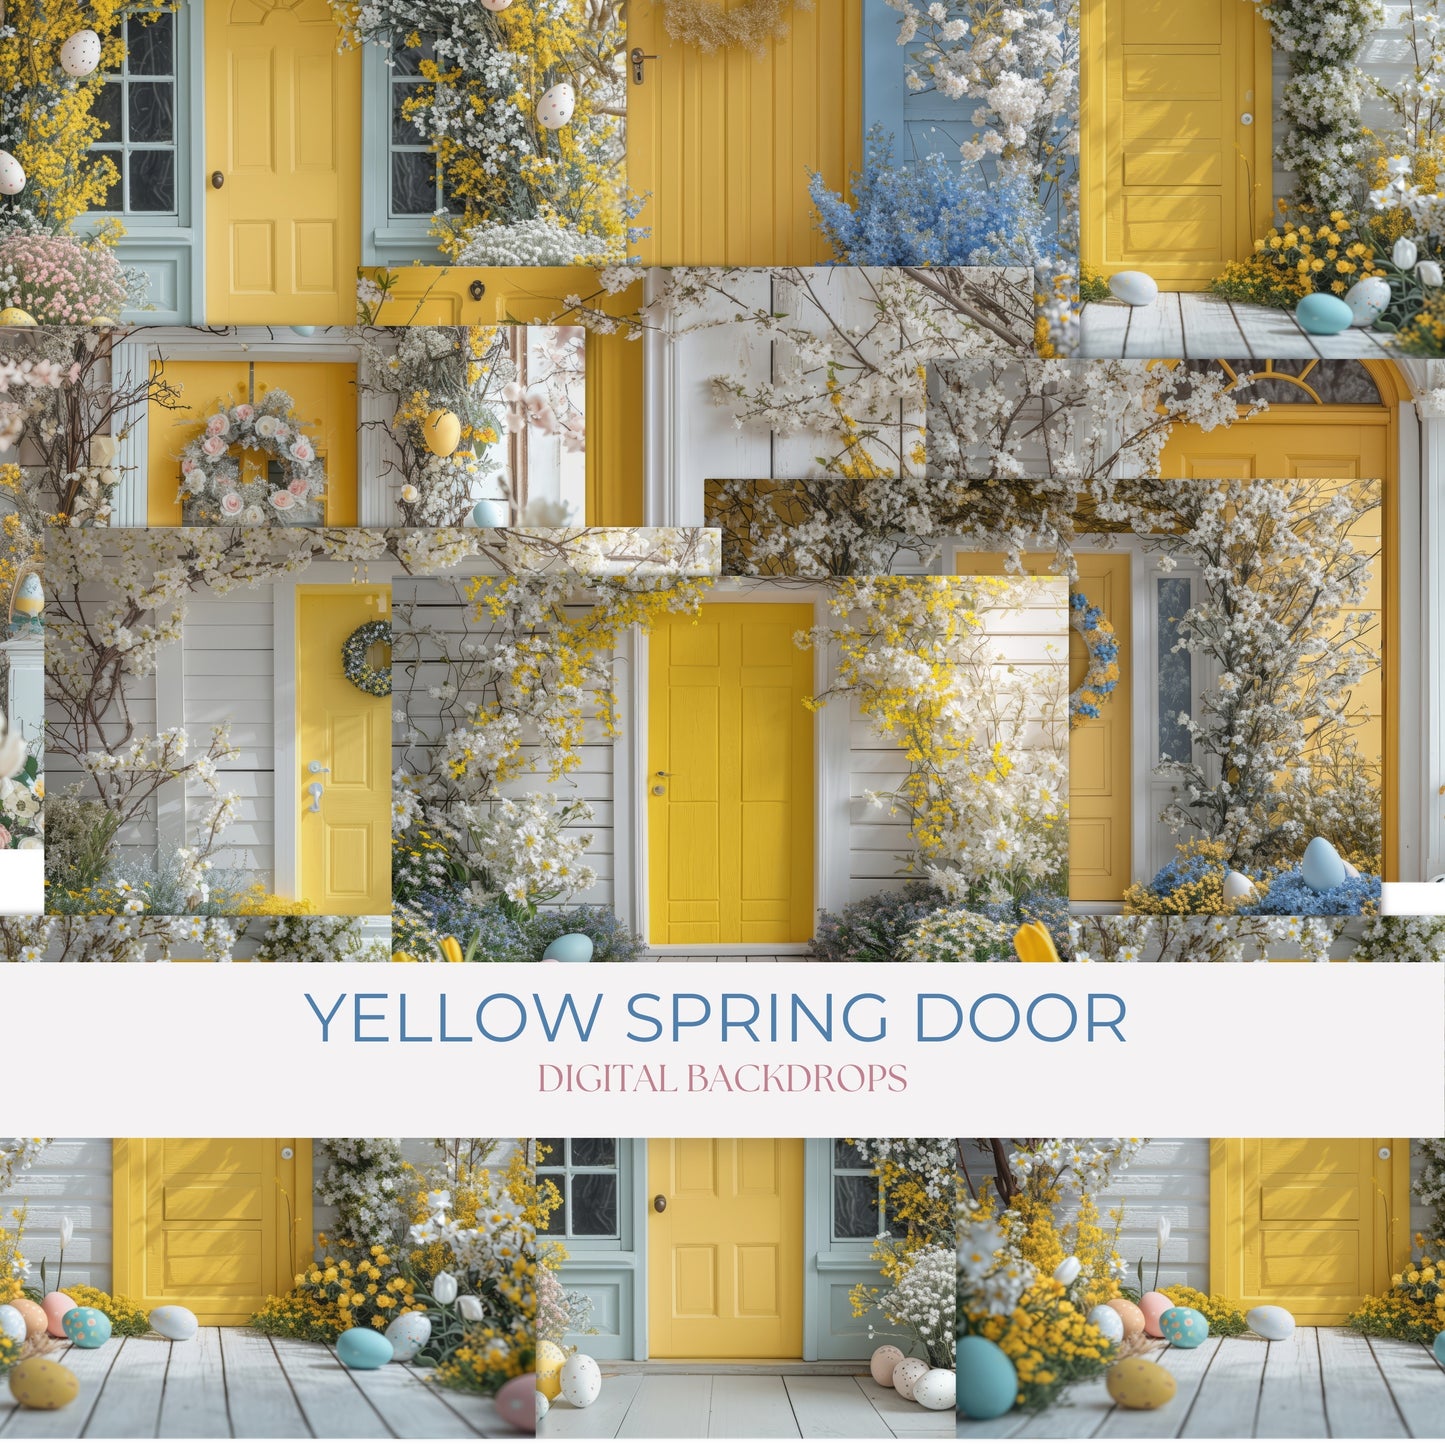 Yellow Spring Door Digital Backdrops